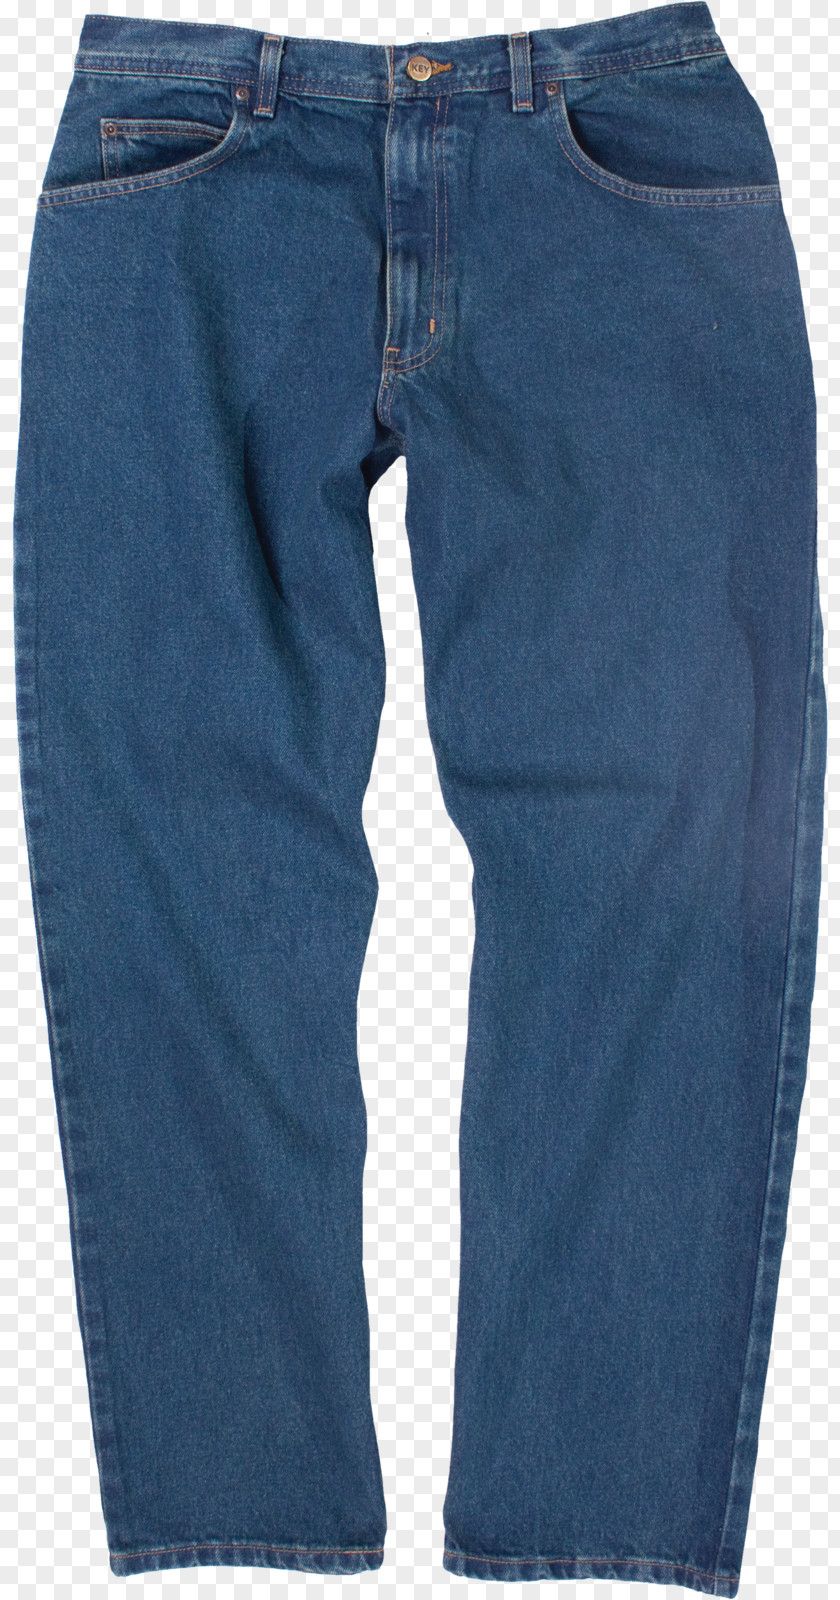 Jeans Denim Clothing Pants Zipper PNG